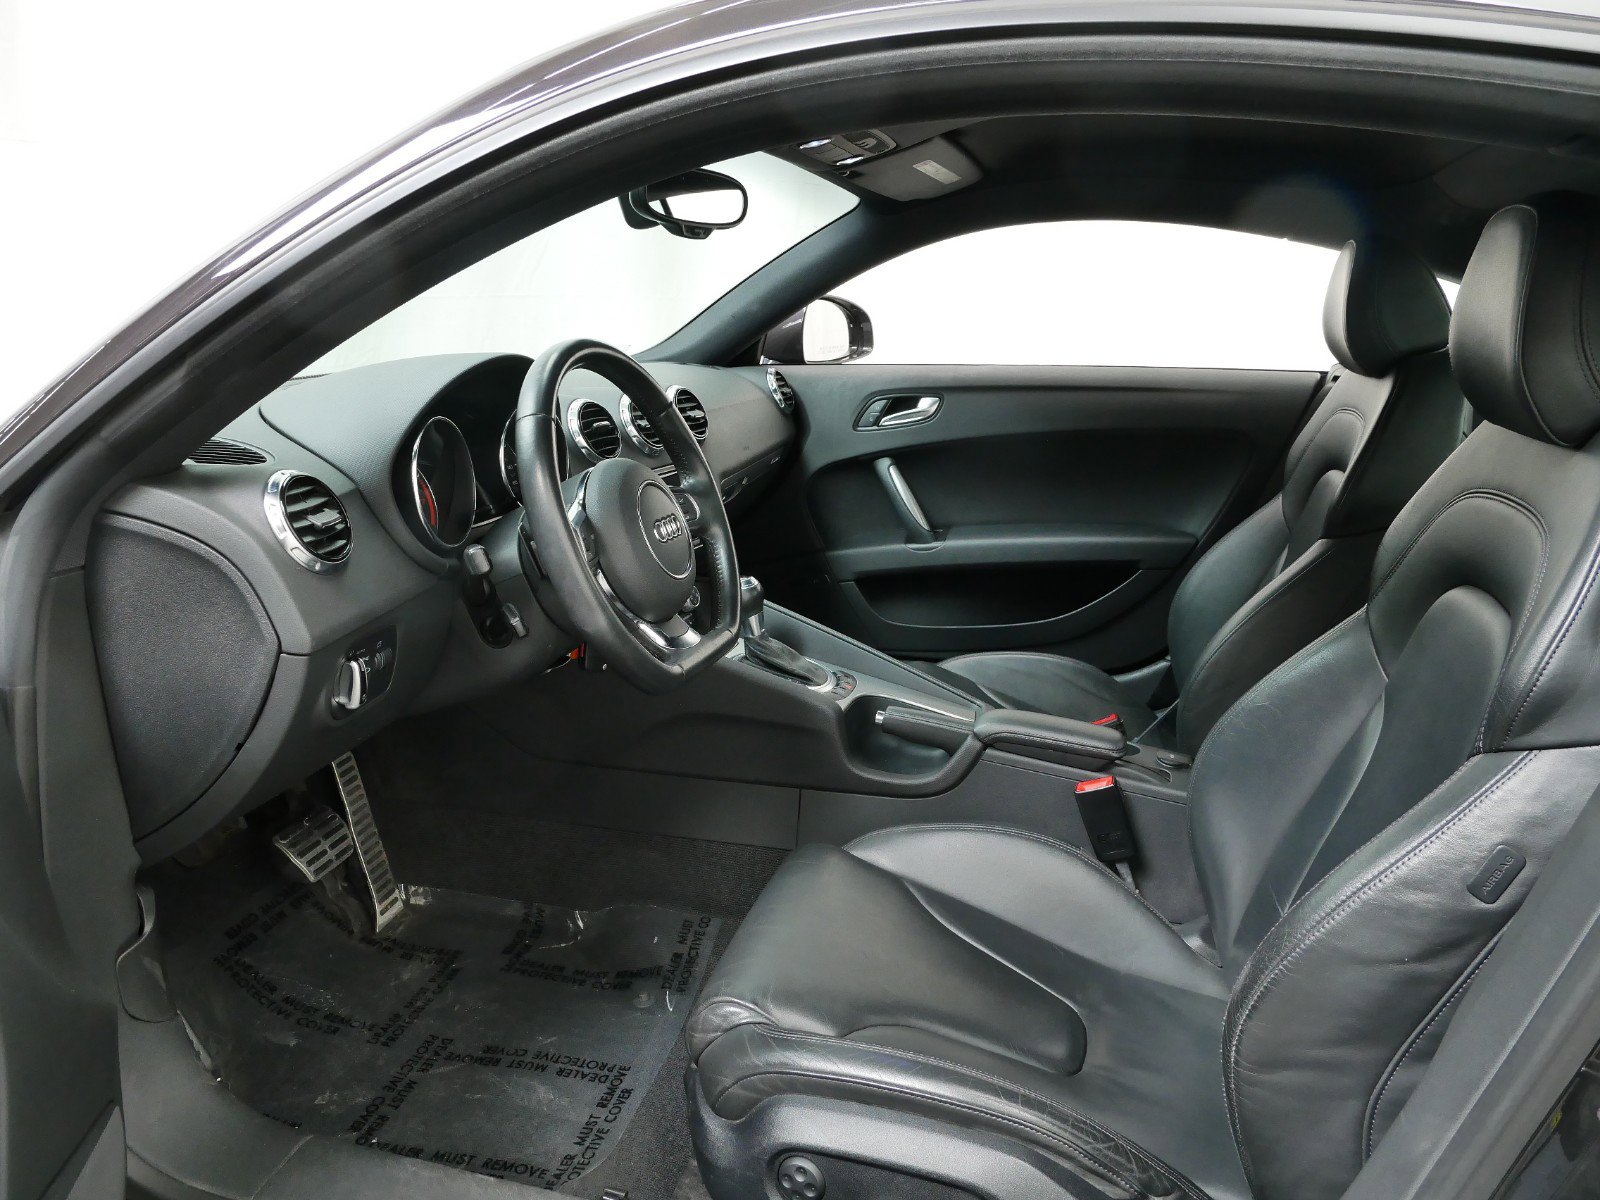 Used 2012 Audi TT Premium Plus with VIN TRUKFAFK1C1009705 for sale in Minneapolis, Minnesota